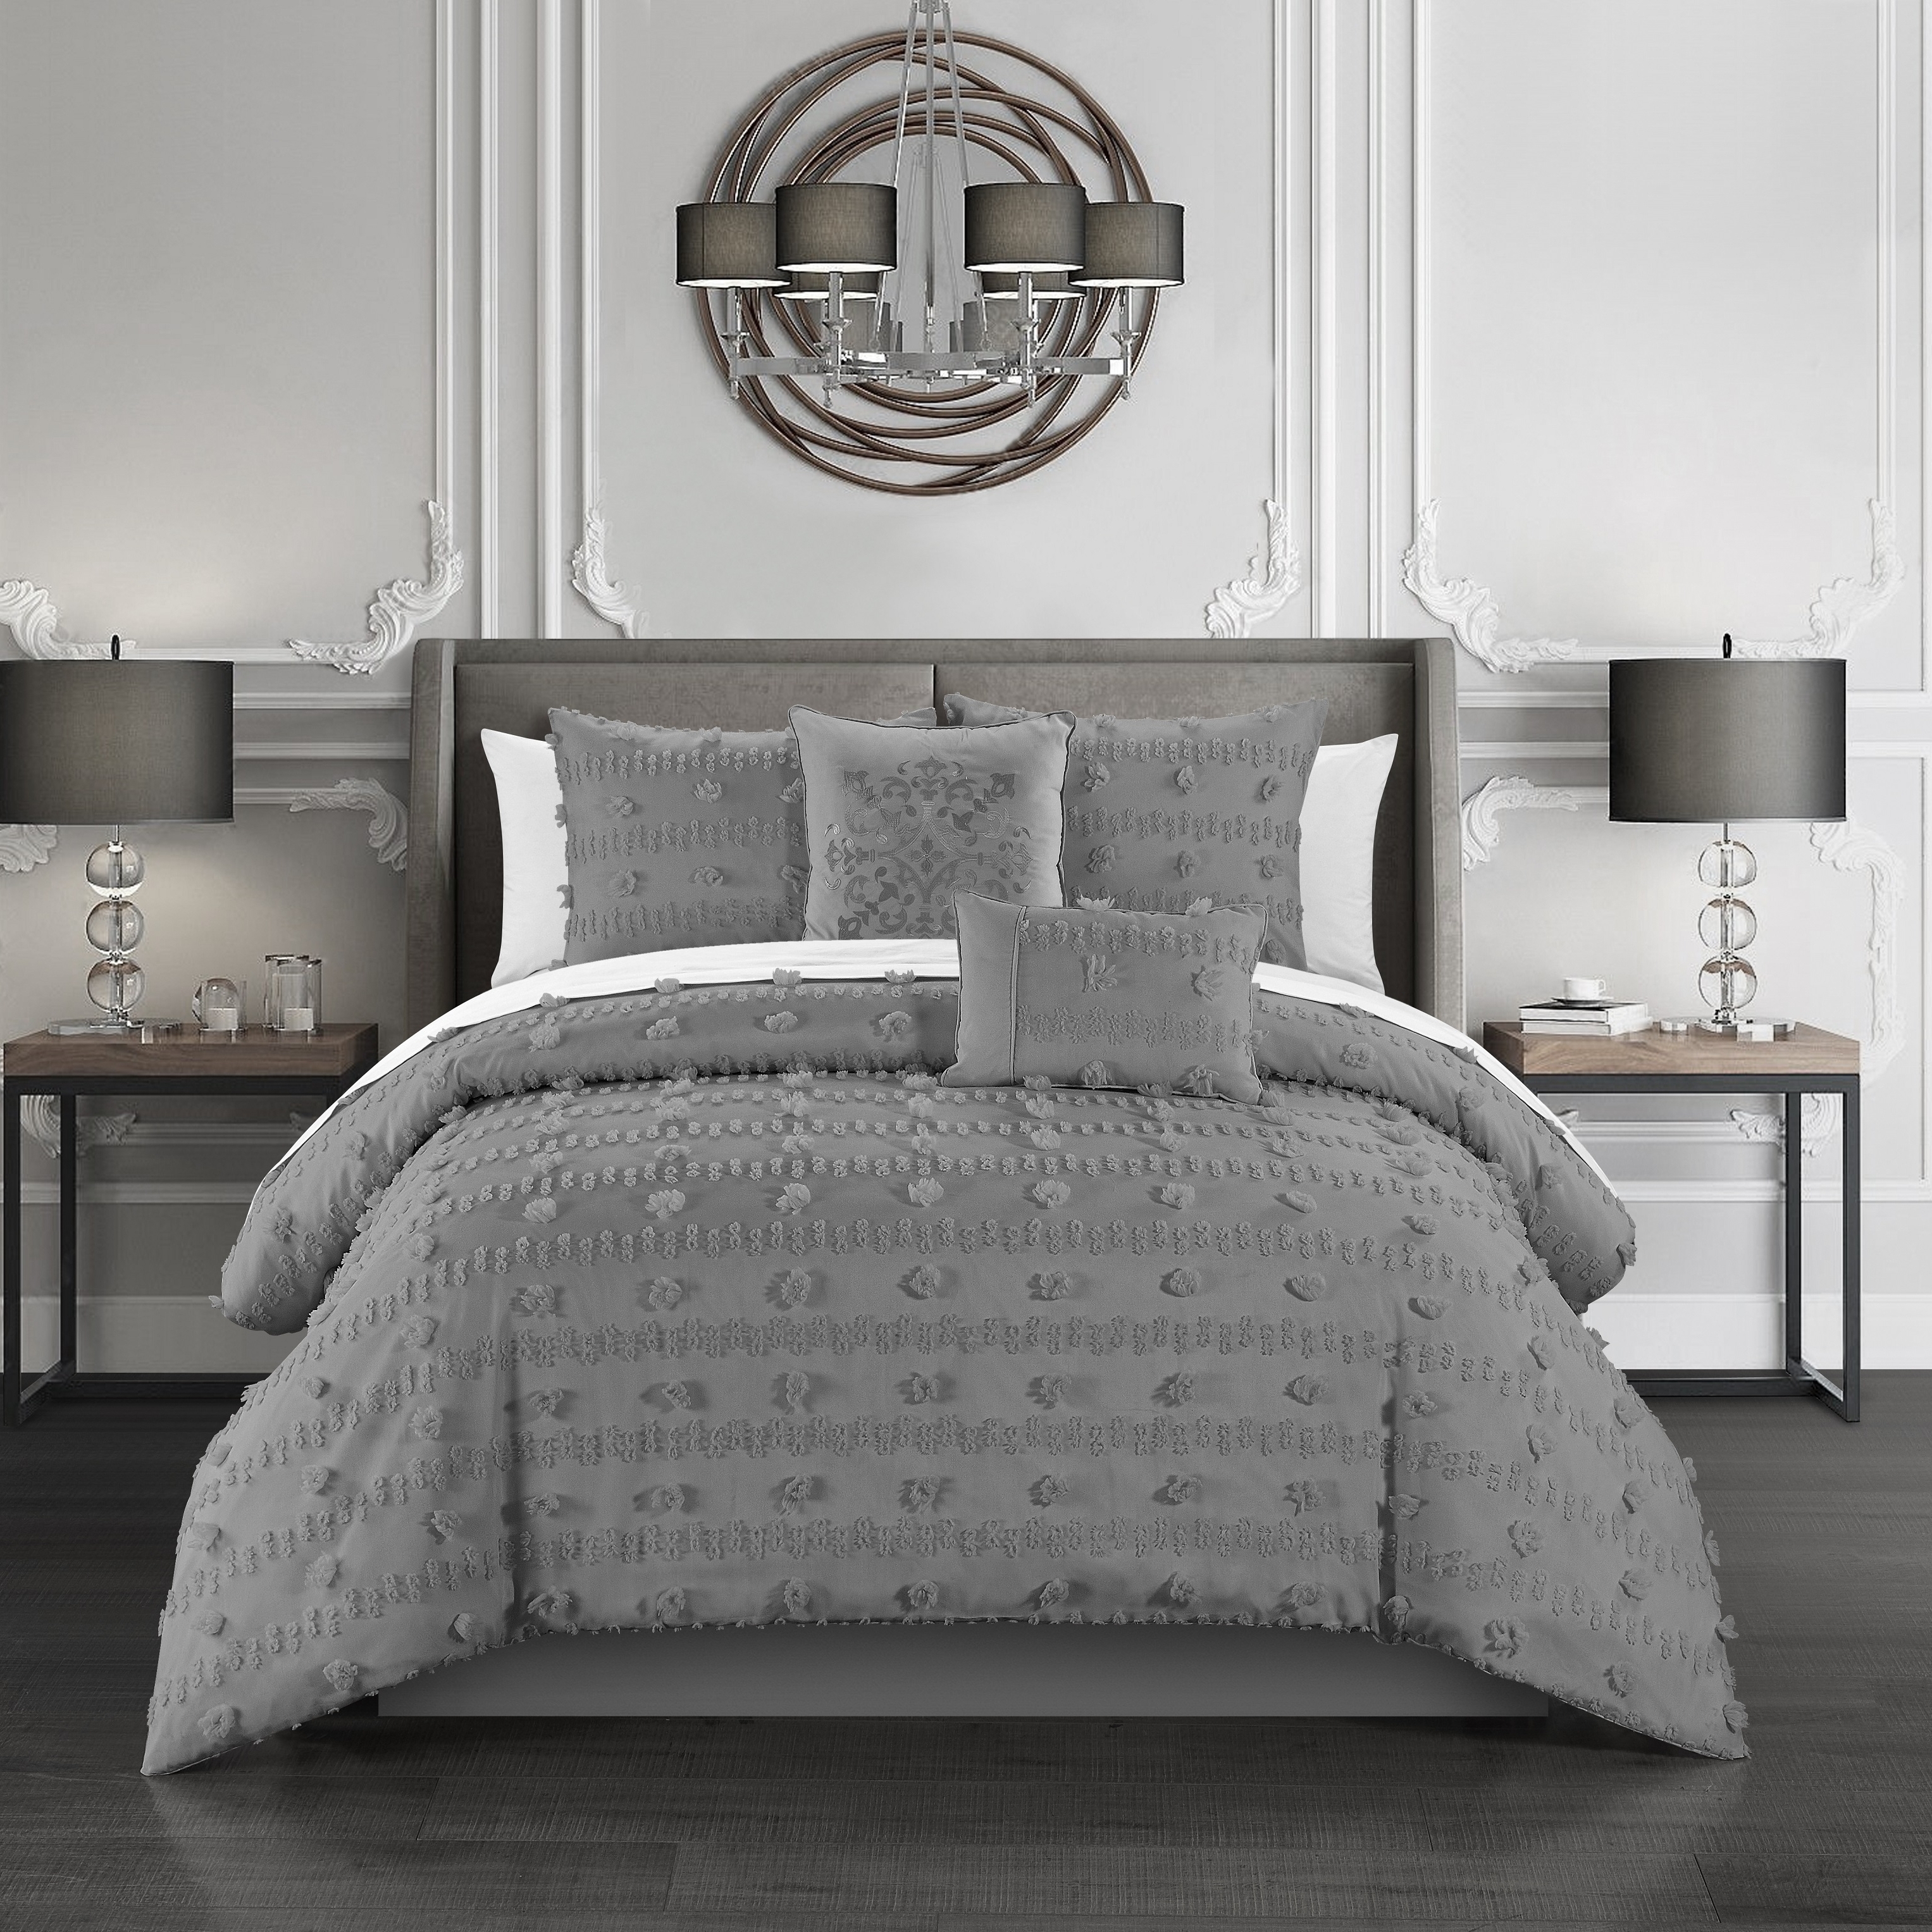 Ahtisa 5 Piece Comforter Set Jacquard Floral Applique Design Bedding - Sand, Queen